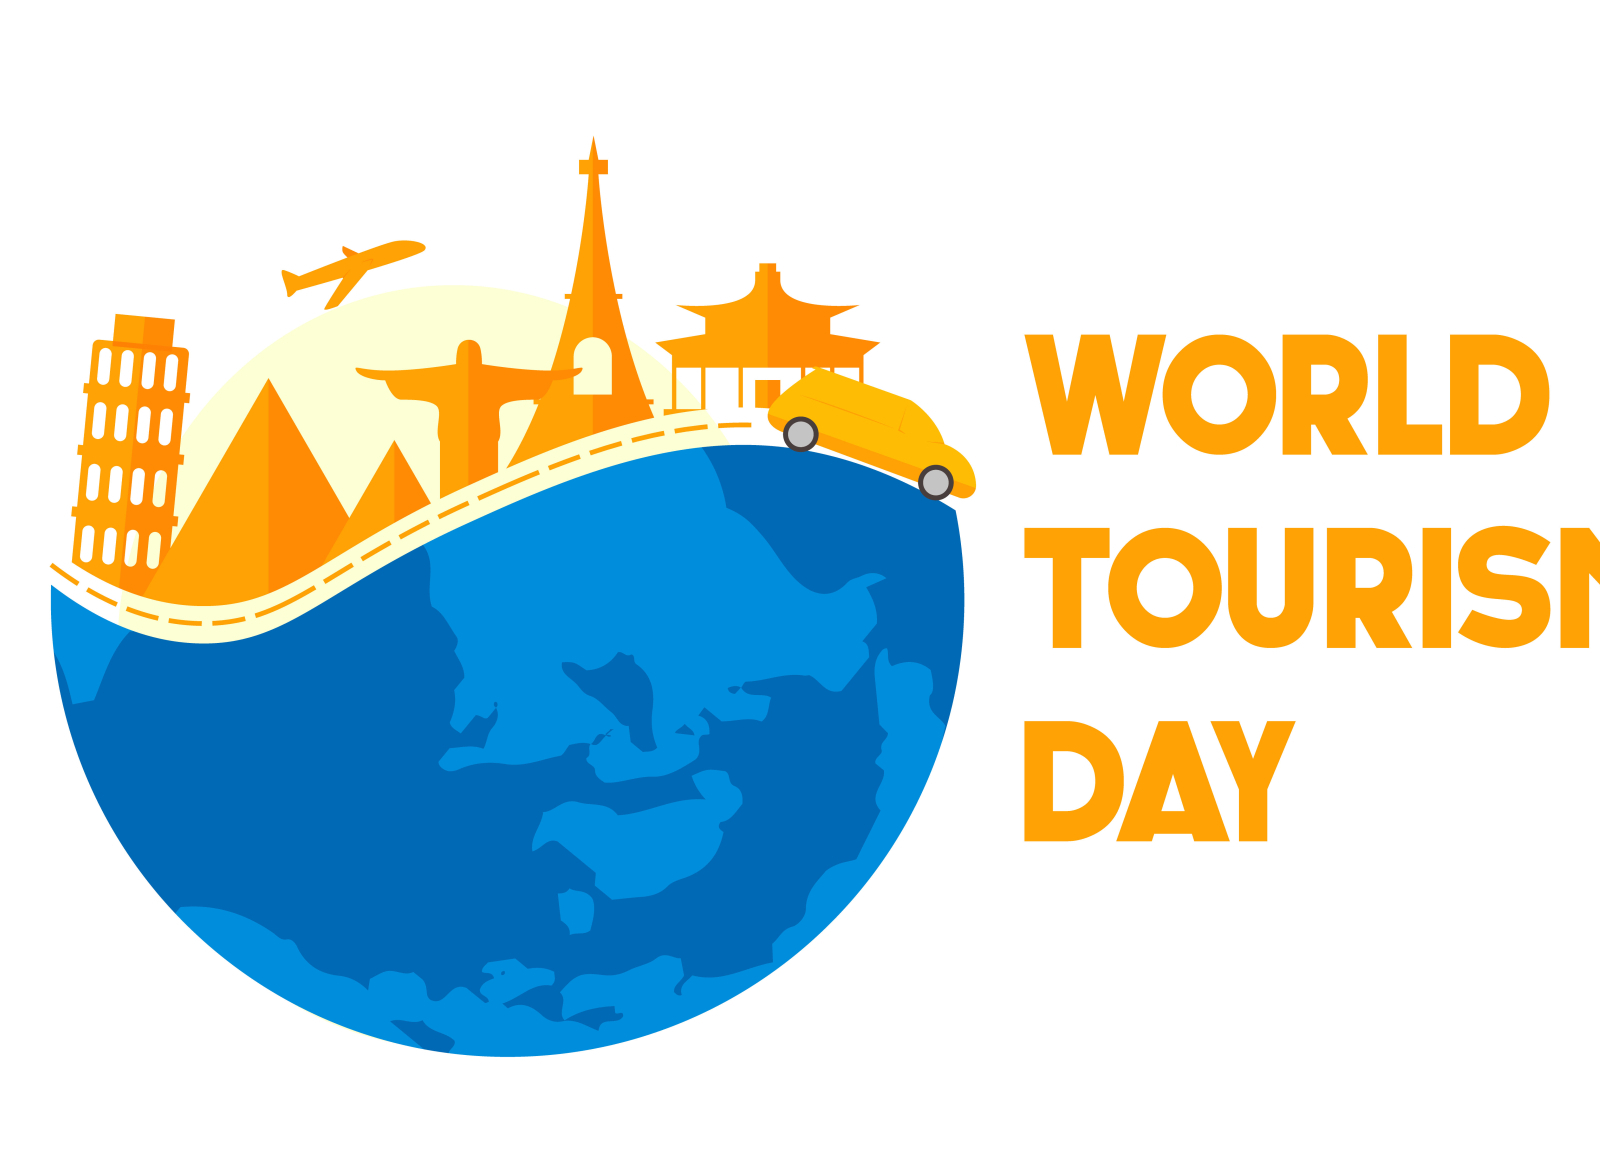 world tourism day design